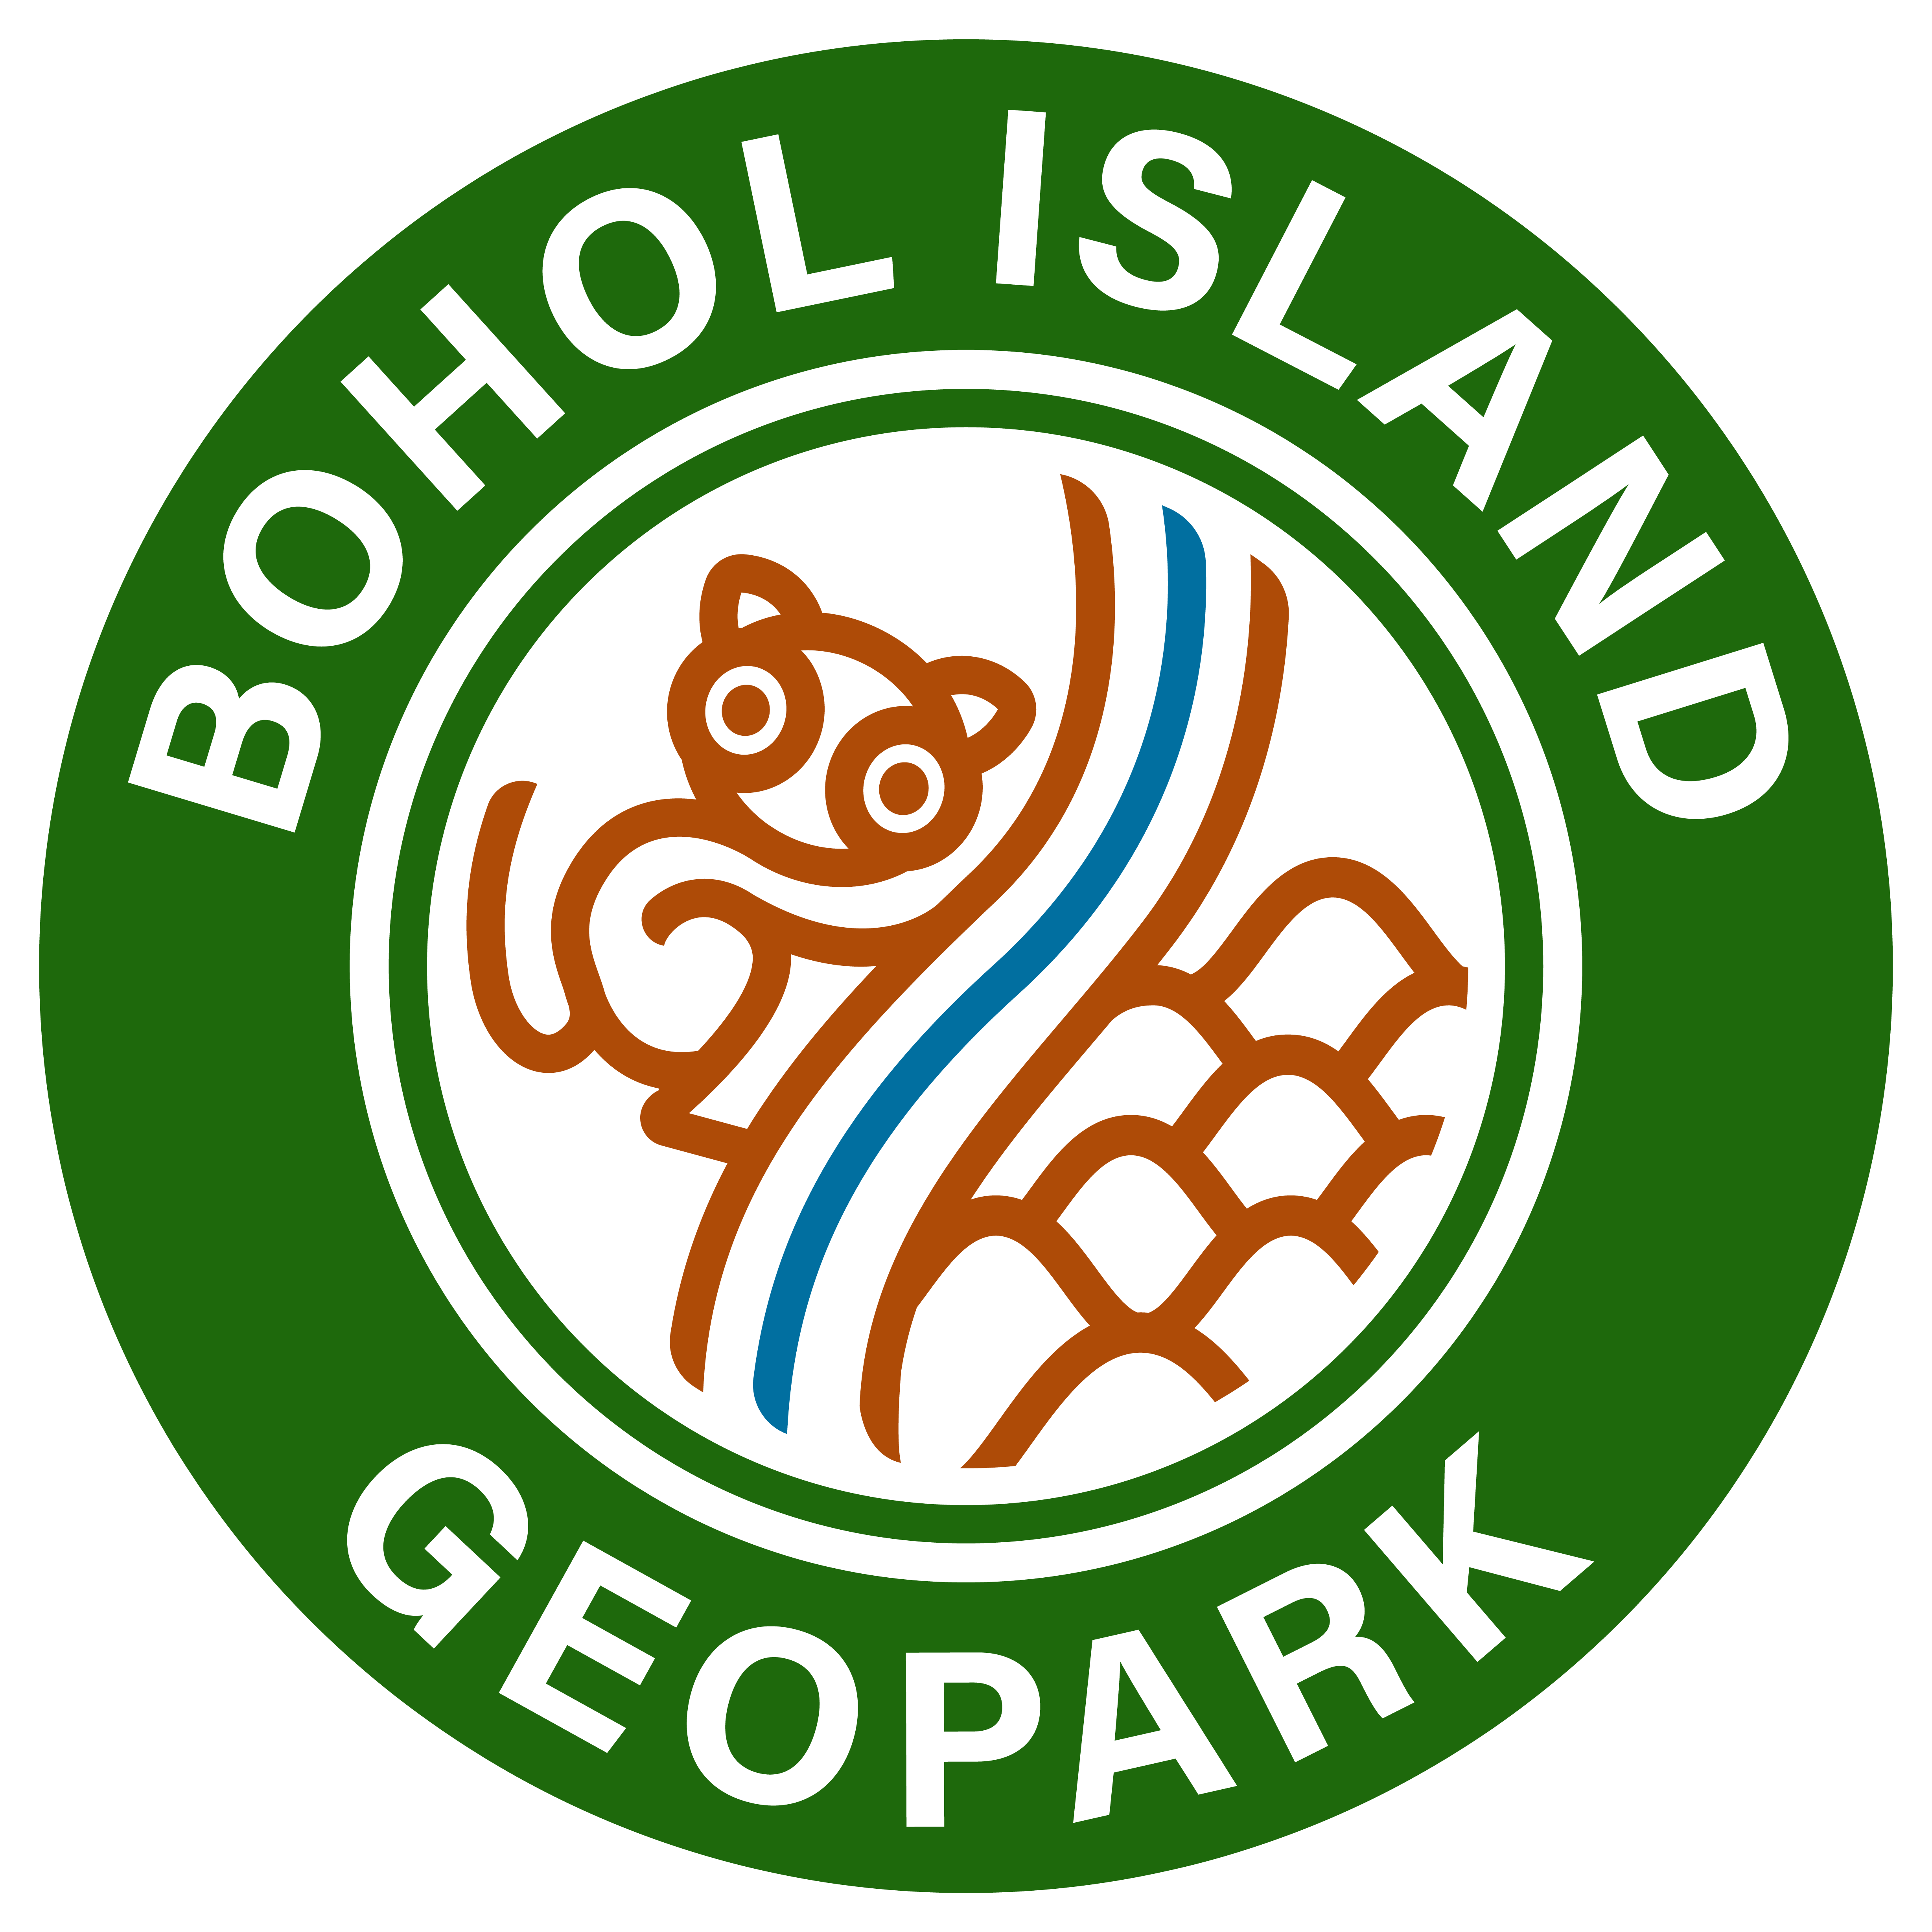 Bohol Island Geopark